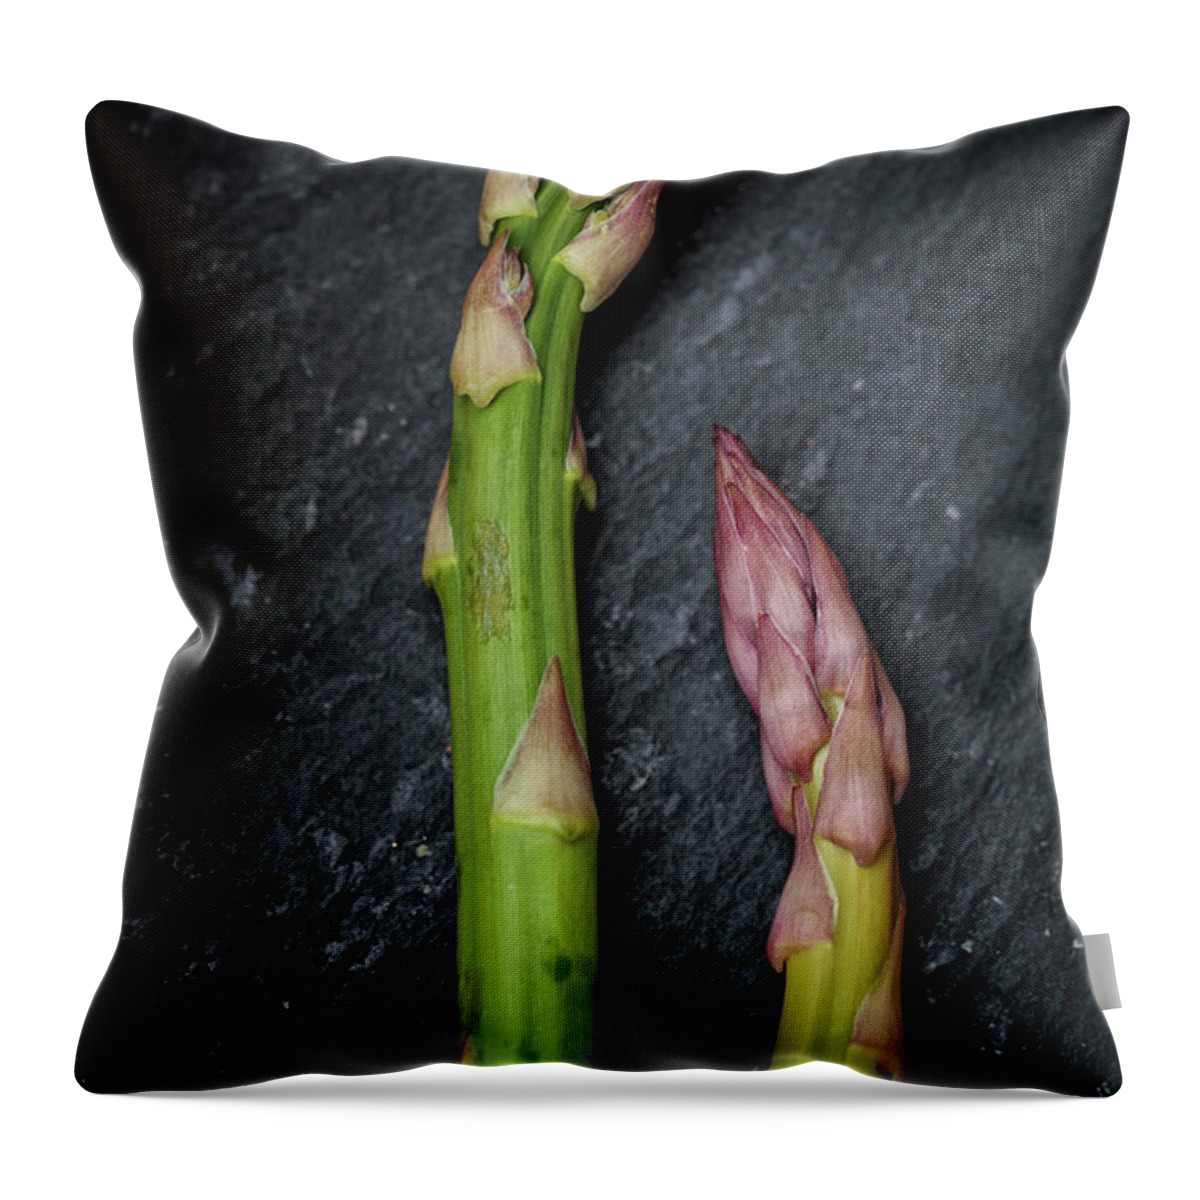 Asparagus Throw Pillow featuring the photograph Fresh Green Asparagus #5 by Nailia Schwarz